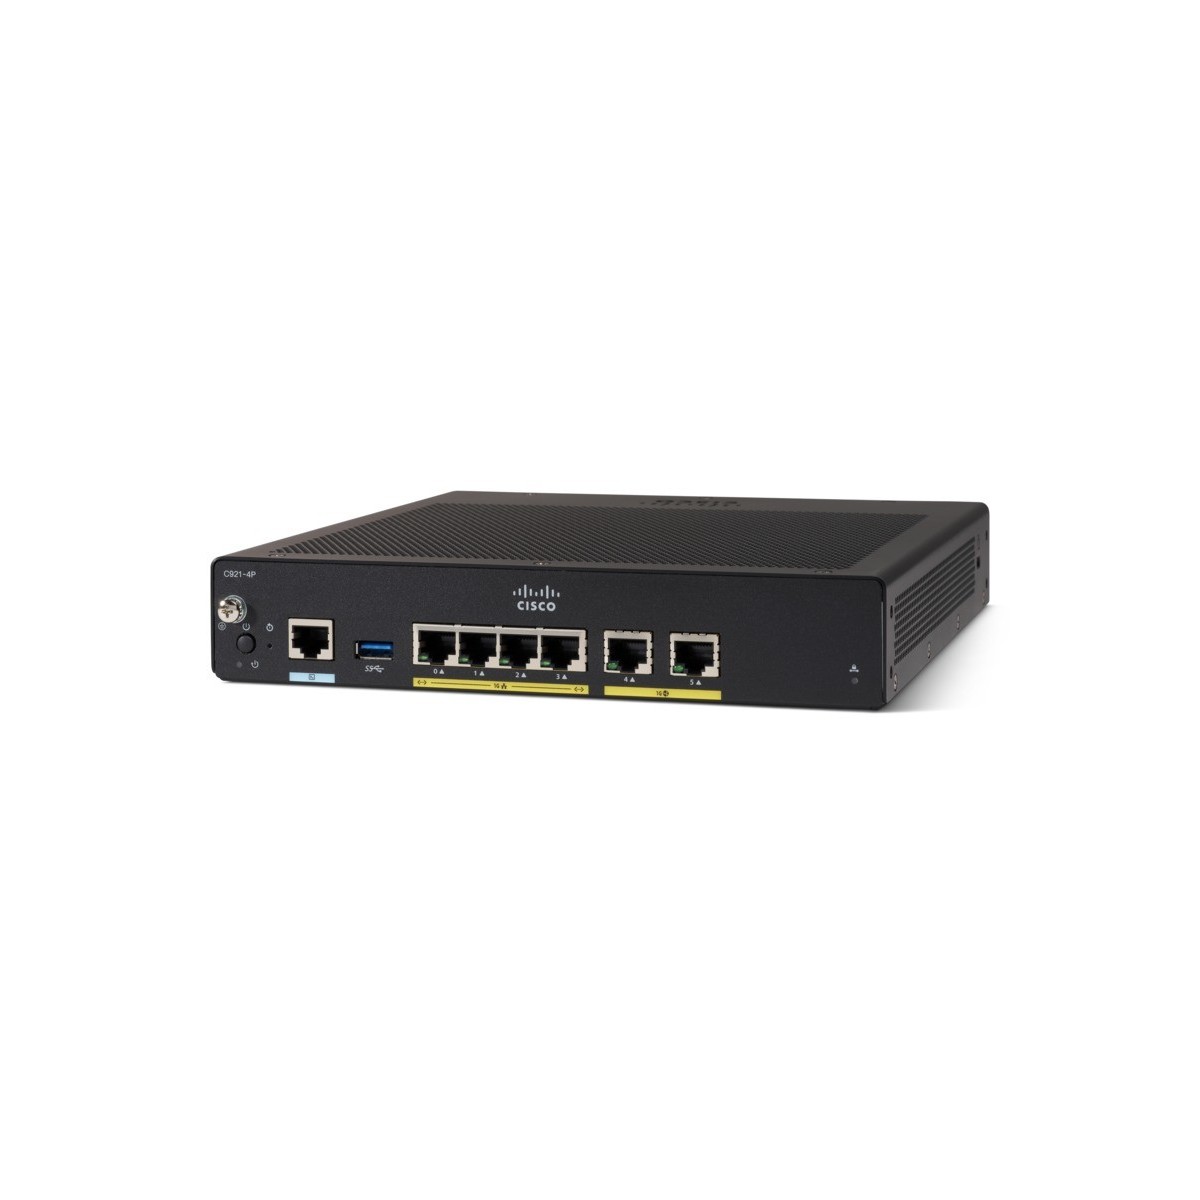 927 VDSL2/ADSL2+ over POTs and 1GE/SFP Sec Router